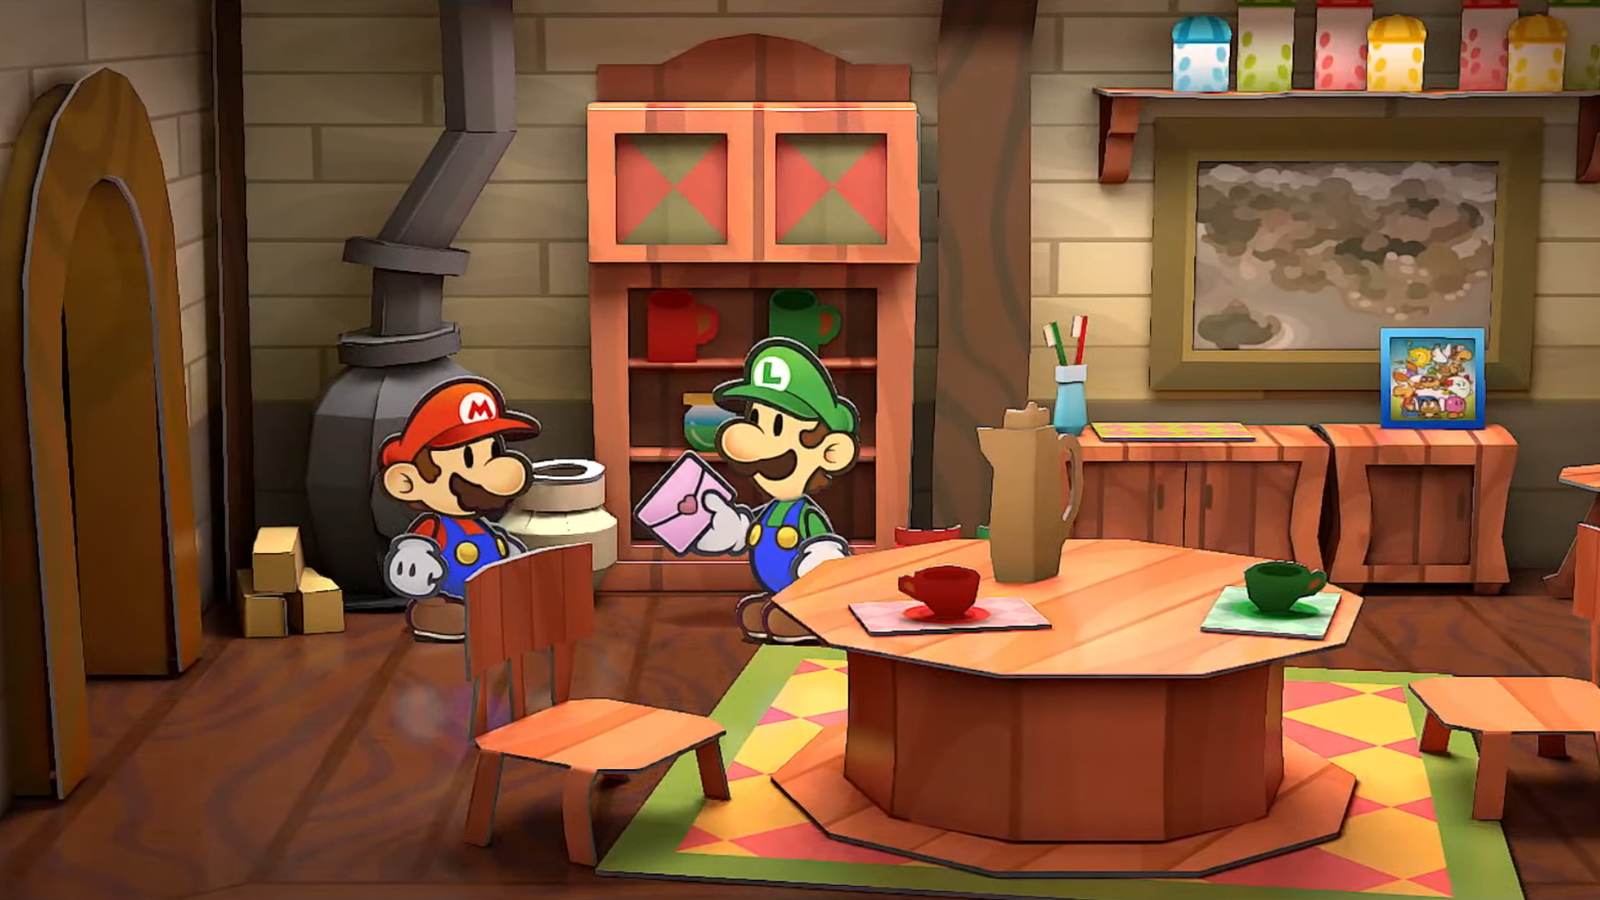 Nintendo is remaking Paper Mario: The Thousand-Year Door for